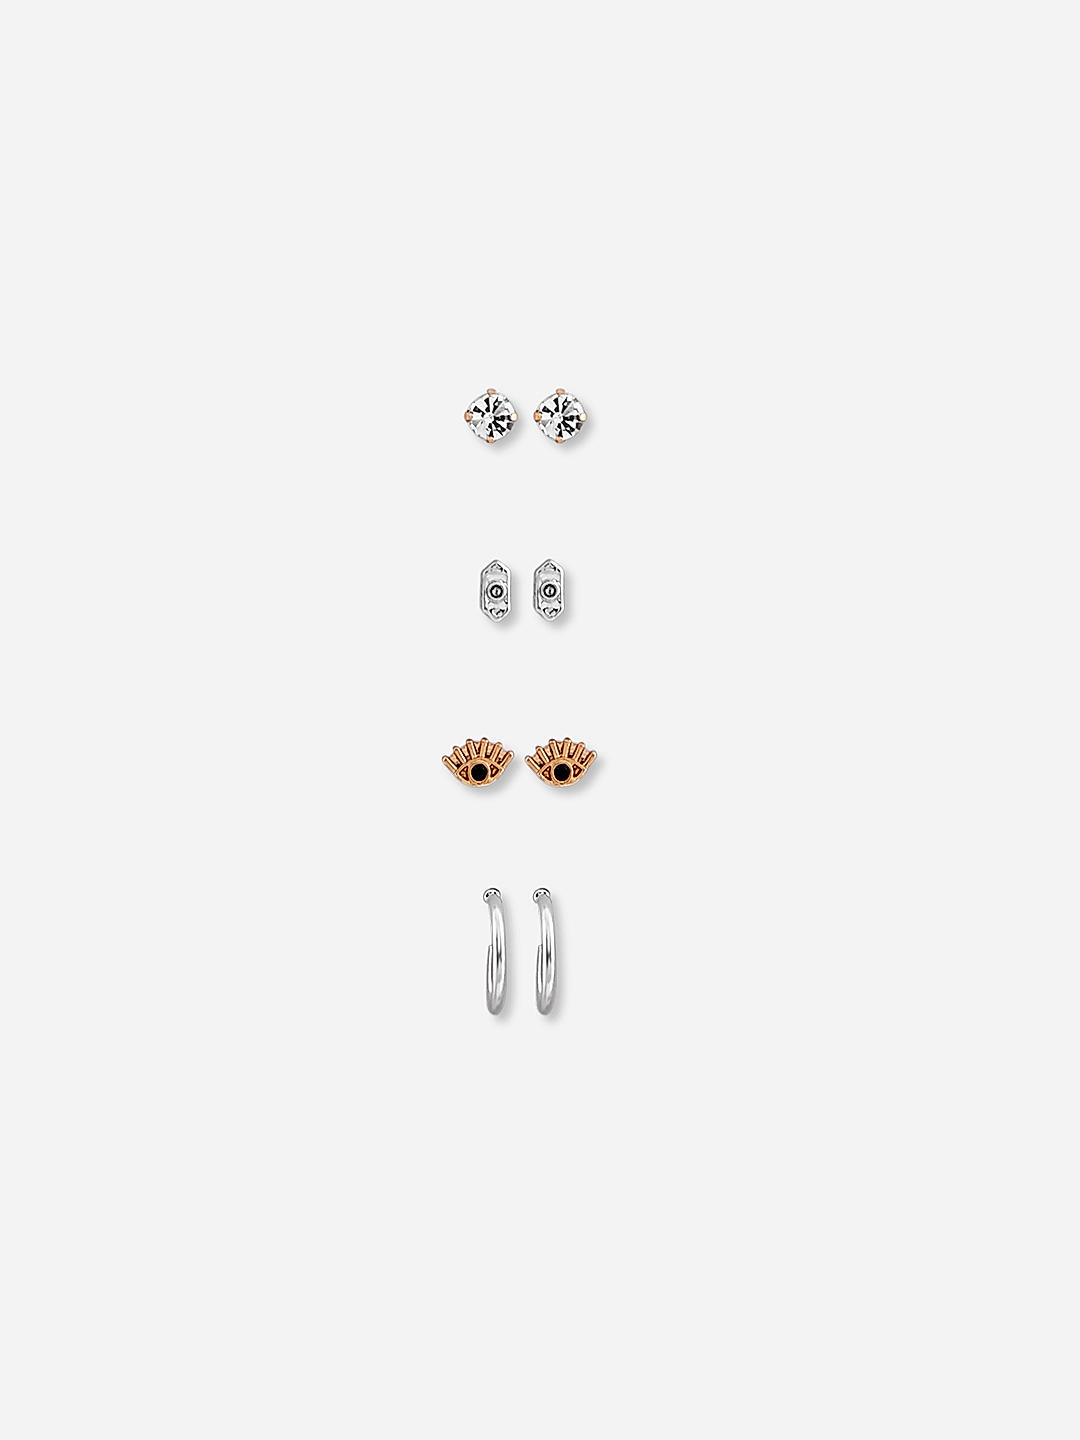 Sterling Silver Stud Earrings for Men Women Girls- Hypoallergenic Tiny  Turquoise Stud Earring Set 2mm 3mm